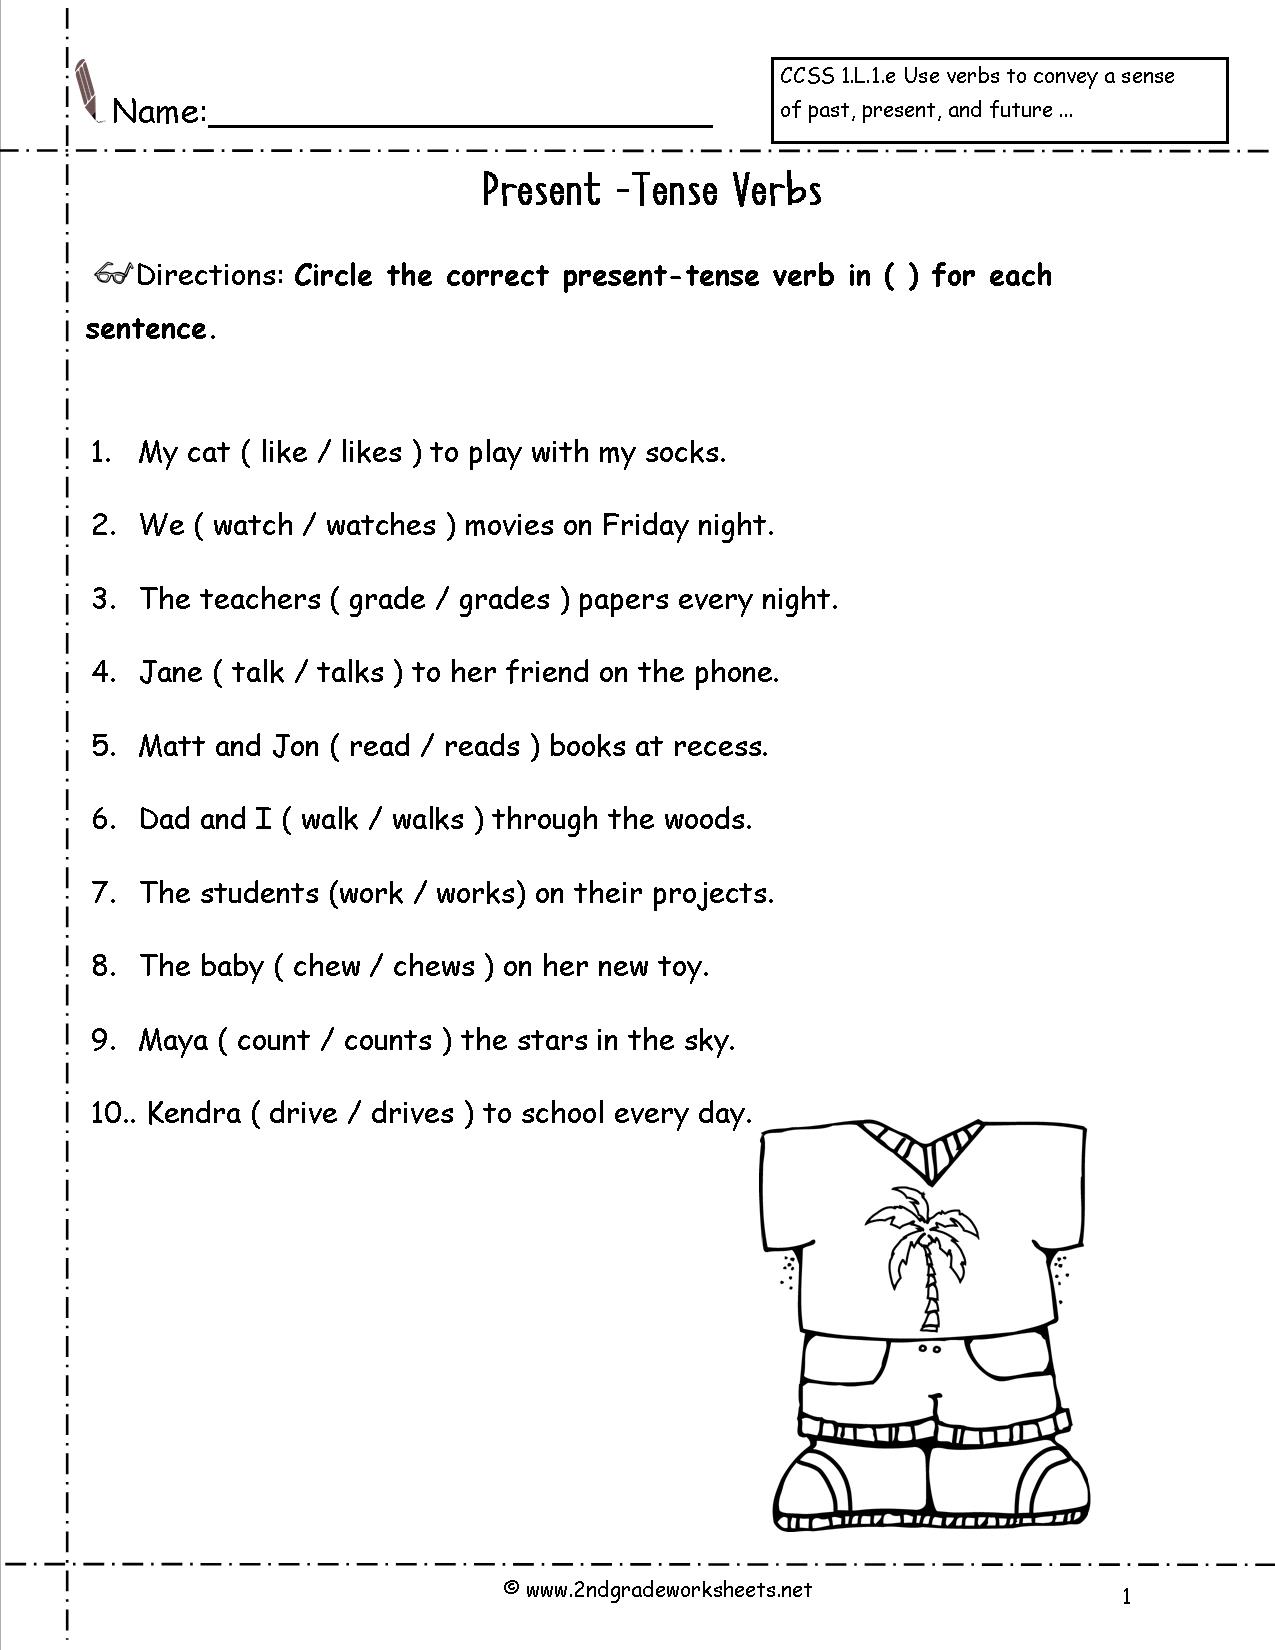 Present Tense Verbs Worksheets 1st Grade Image